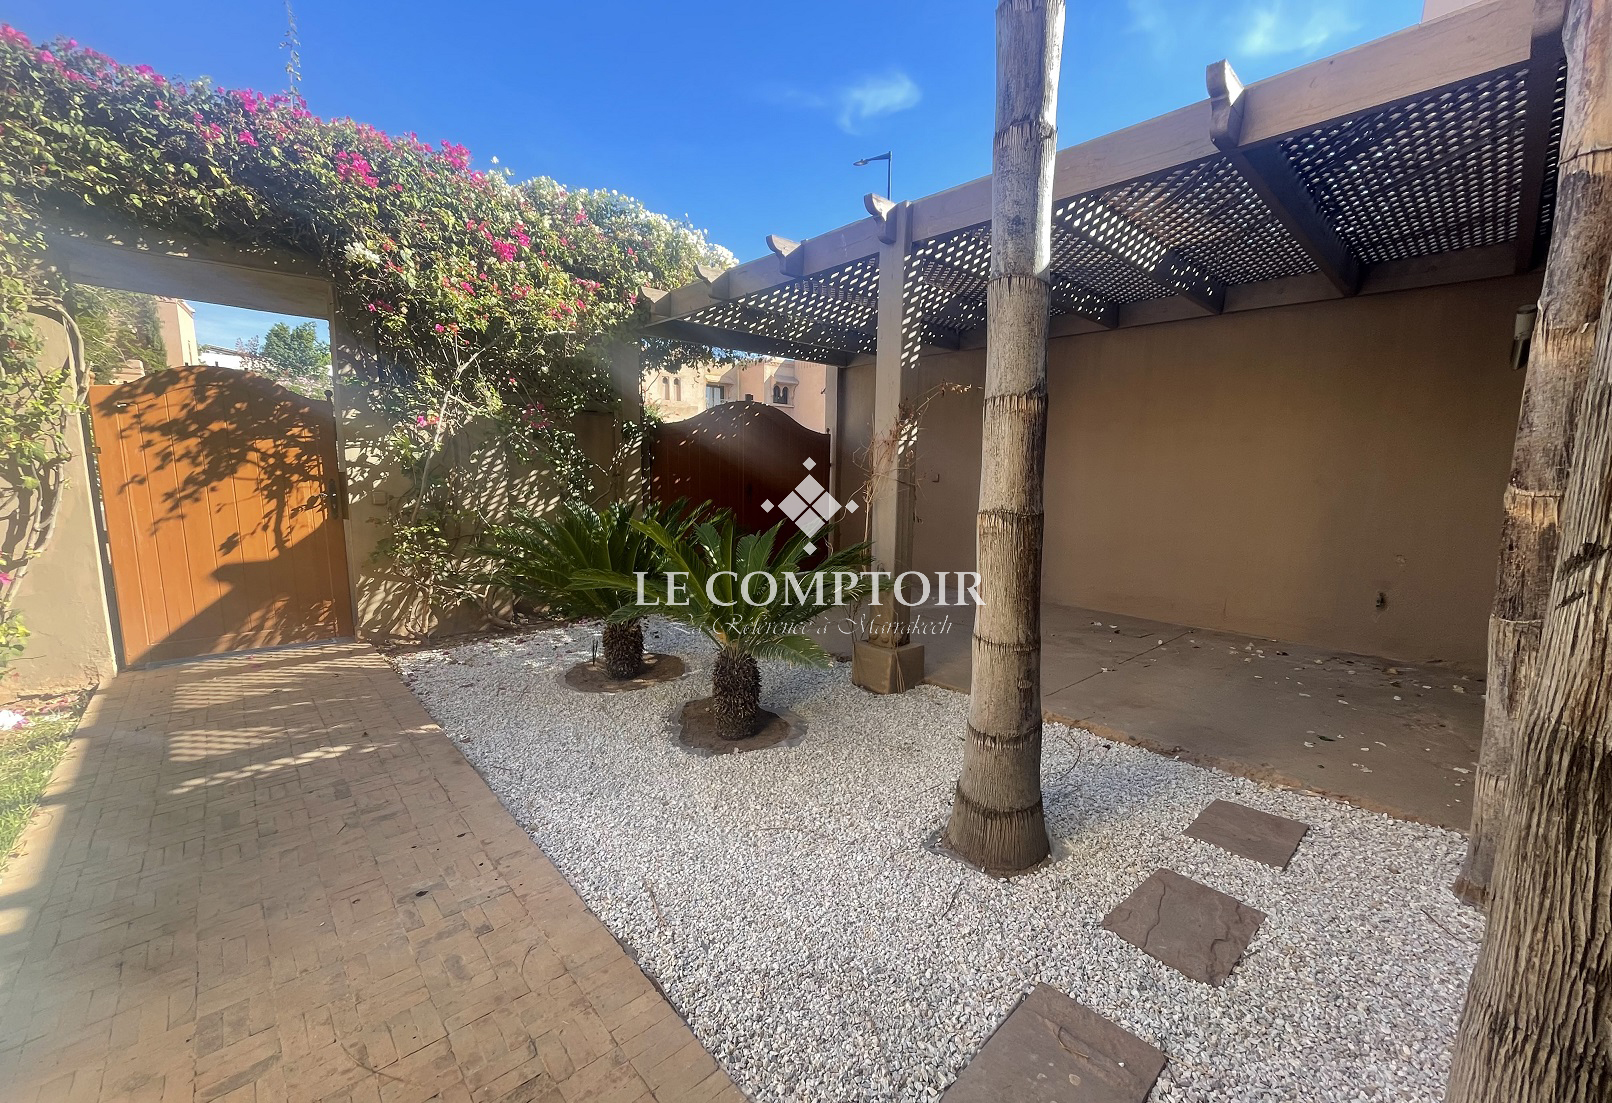 Le Comptoir Immobilier Agence Immobiliere Marrakech Villa Residence Non Meublee Location Marakech Maroc Piscine 17 2